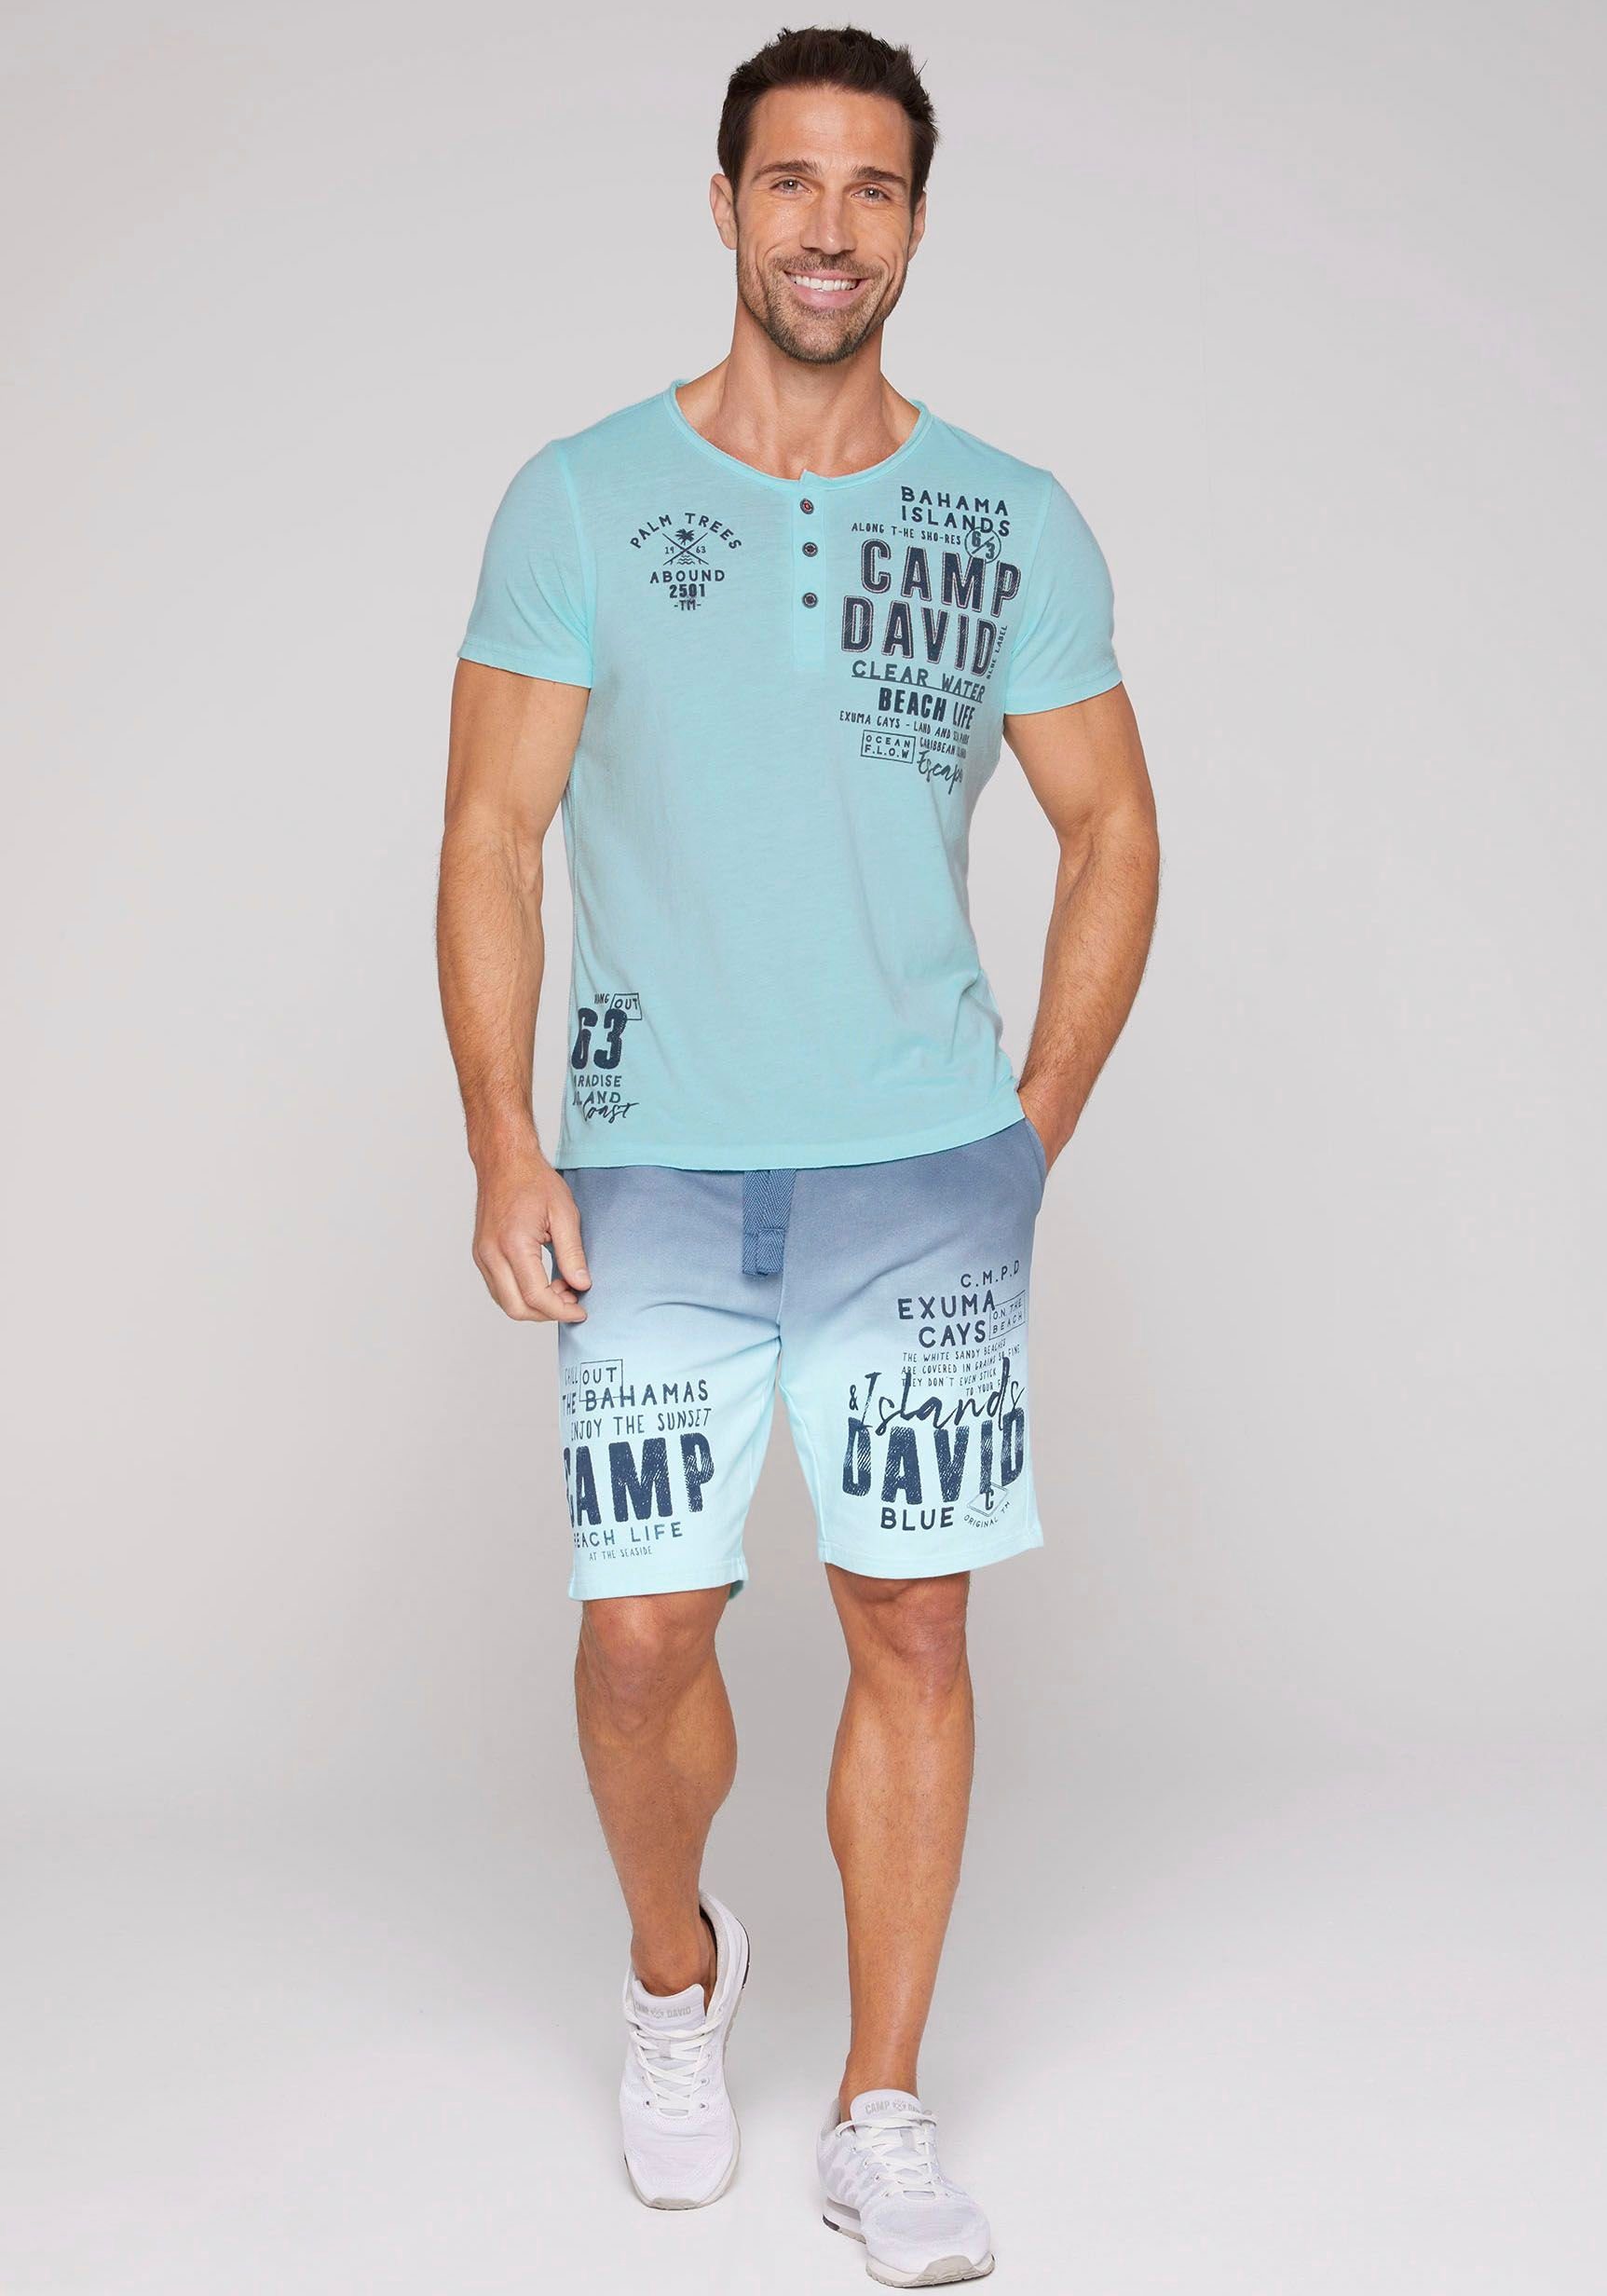 CAMP DAVID T-Shirt Kontrastnähten cool mit mint